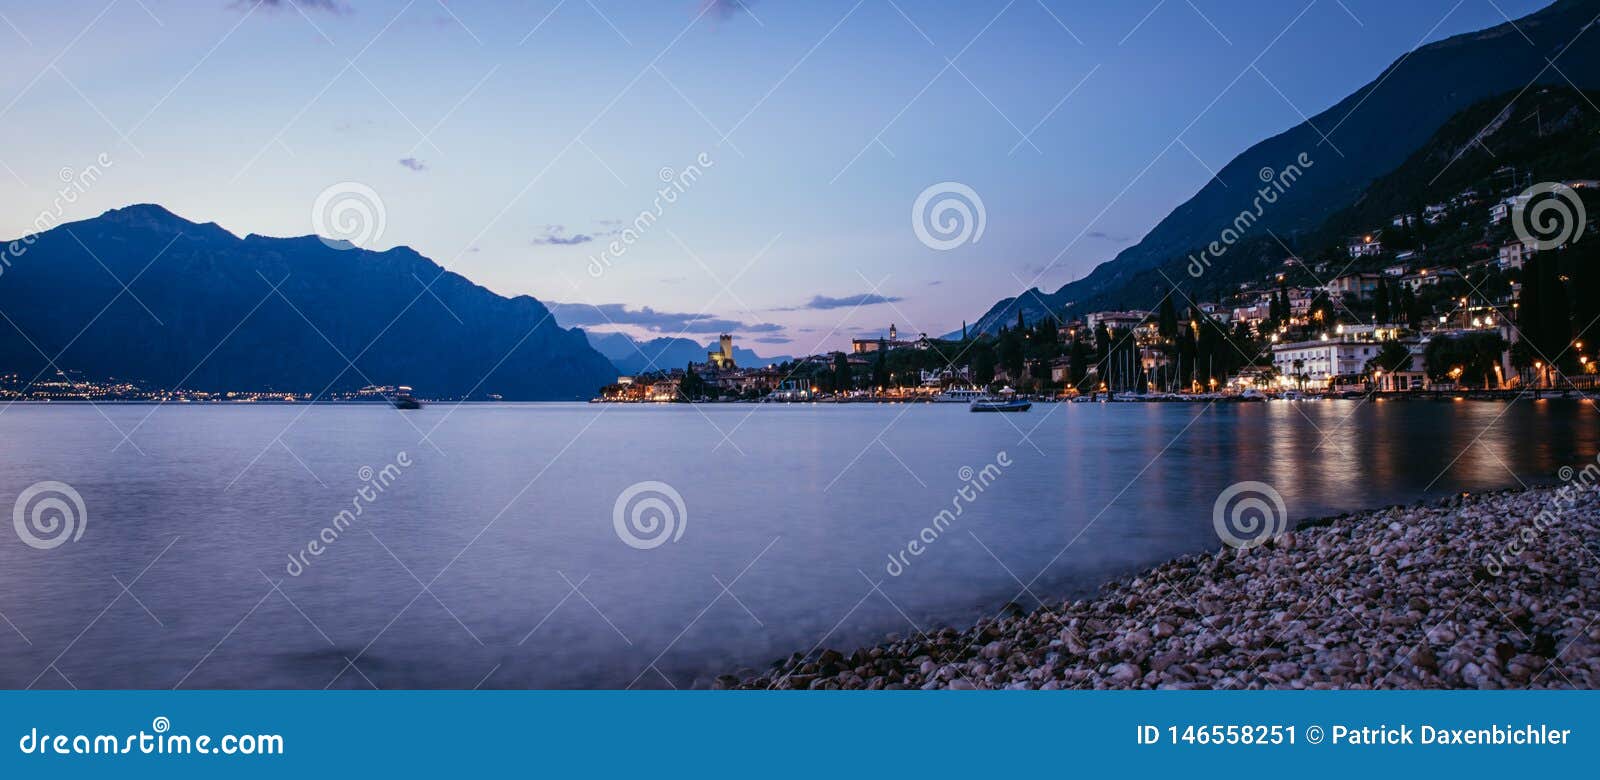 evening scene at lago di garda: beach, lake and village, panorama